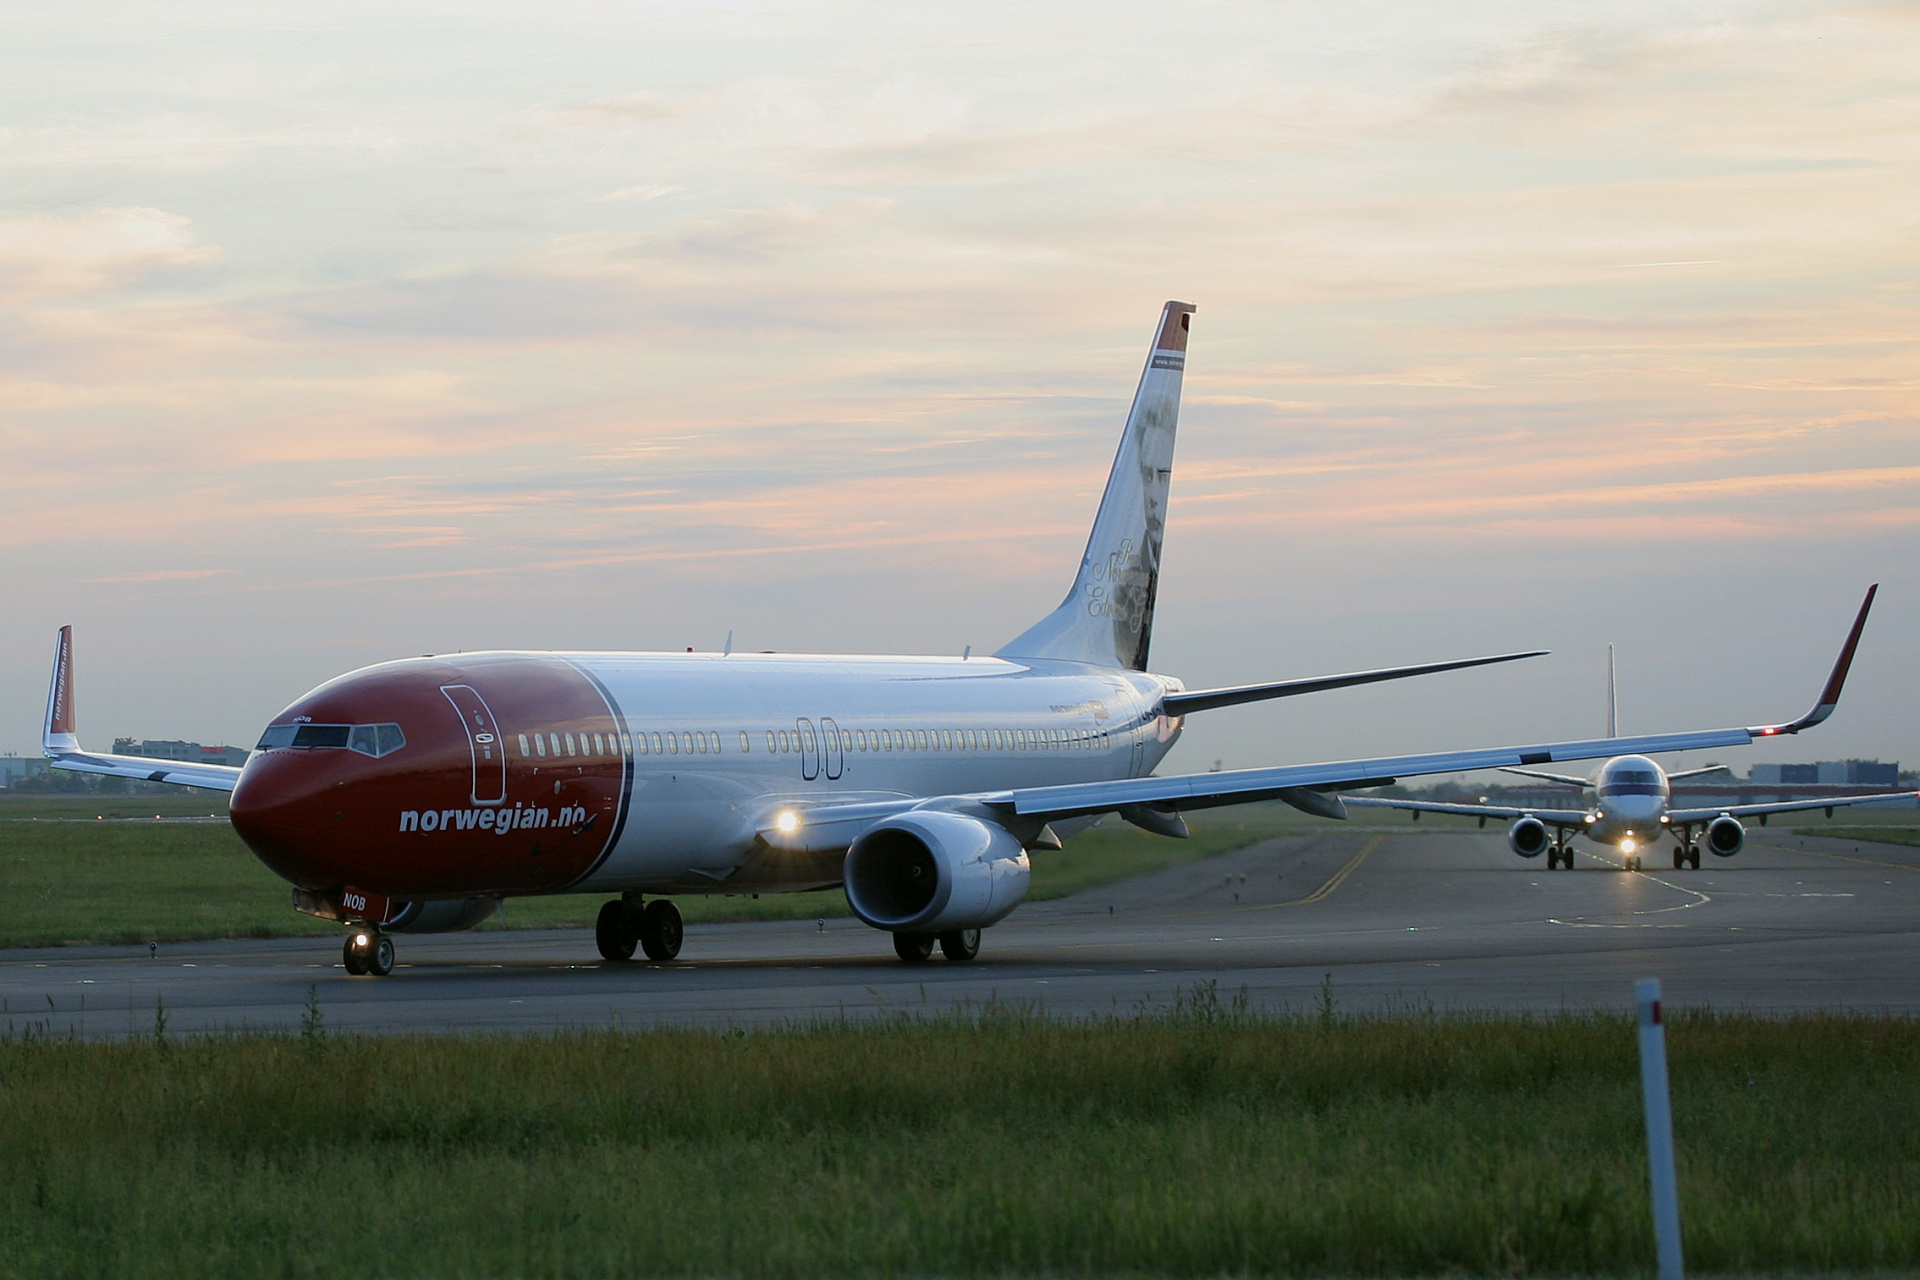 LN-NOB, Norwegian Air Shuttle (Aircraft » EPWA Spotting » Boeing 737-800 » Norwegian Air)